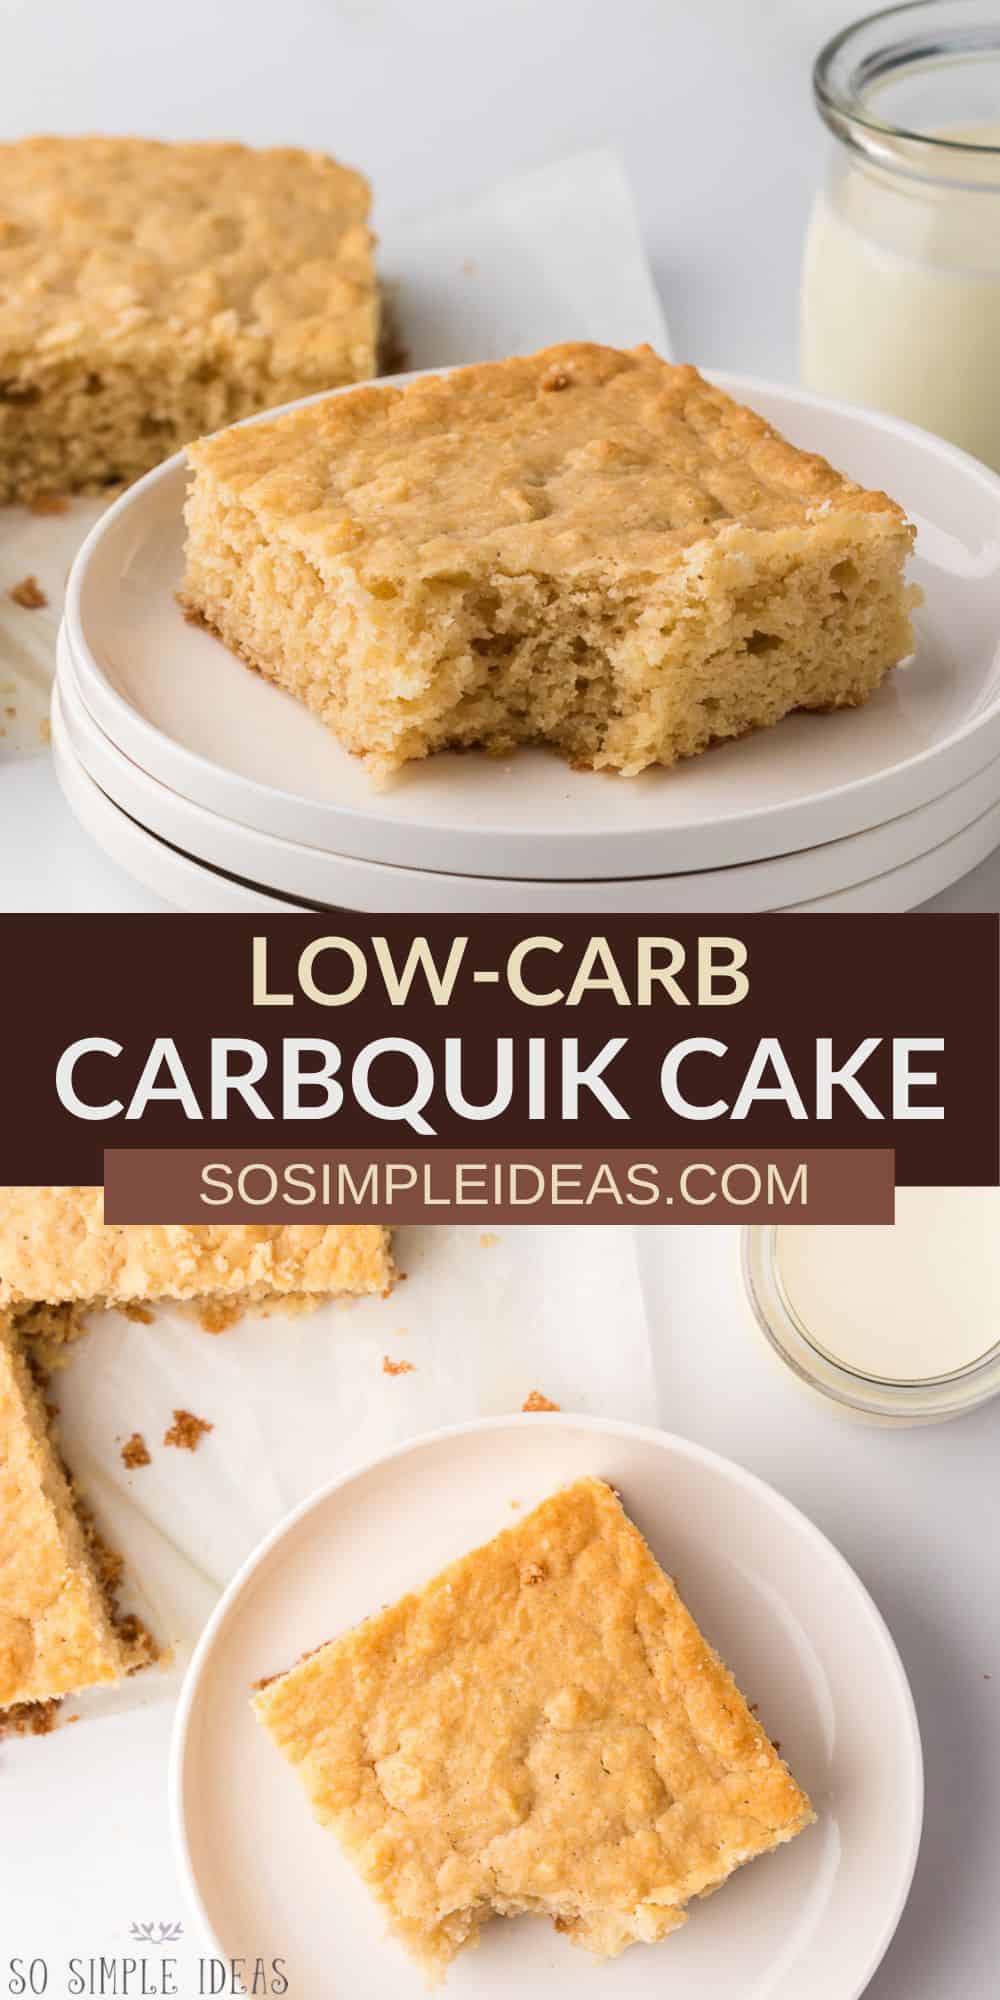 carbquik cake pinterest image.